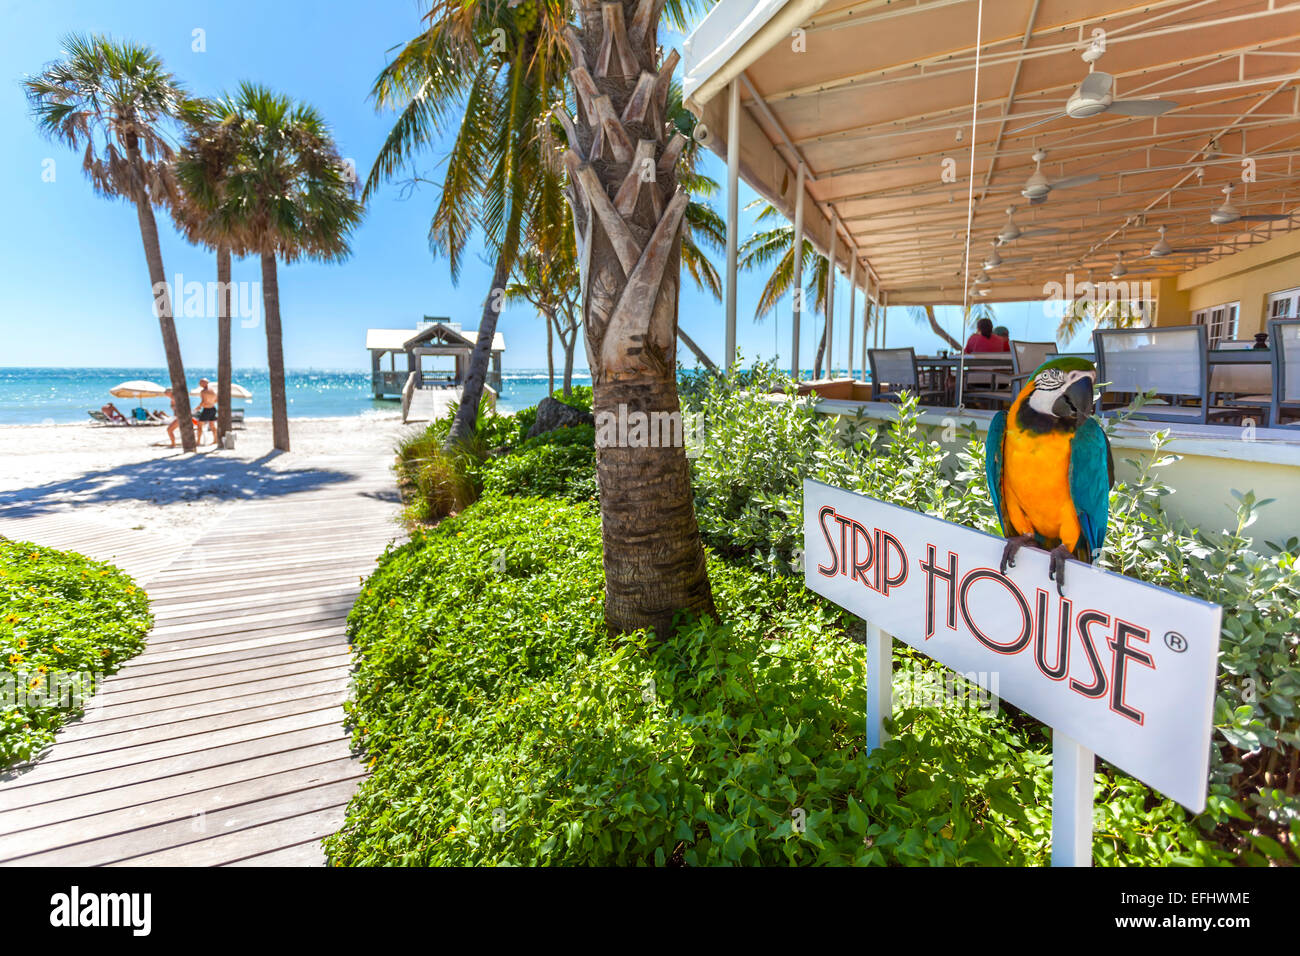 Impressione nel ristorante gourmet La Strip House, raggiungere il resort, Key West, Florida Keys, STATI UNITI D'AMERICA Foto Stock